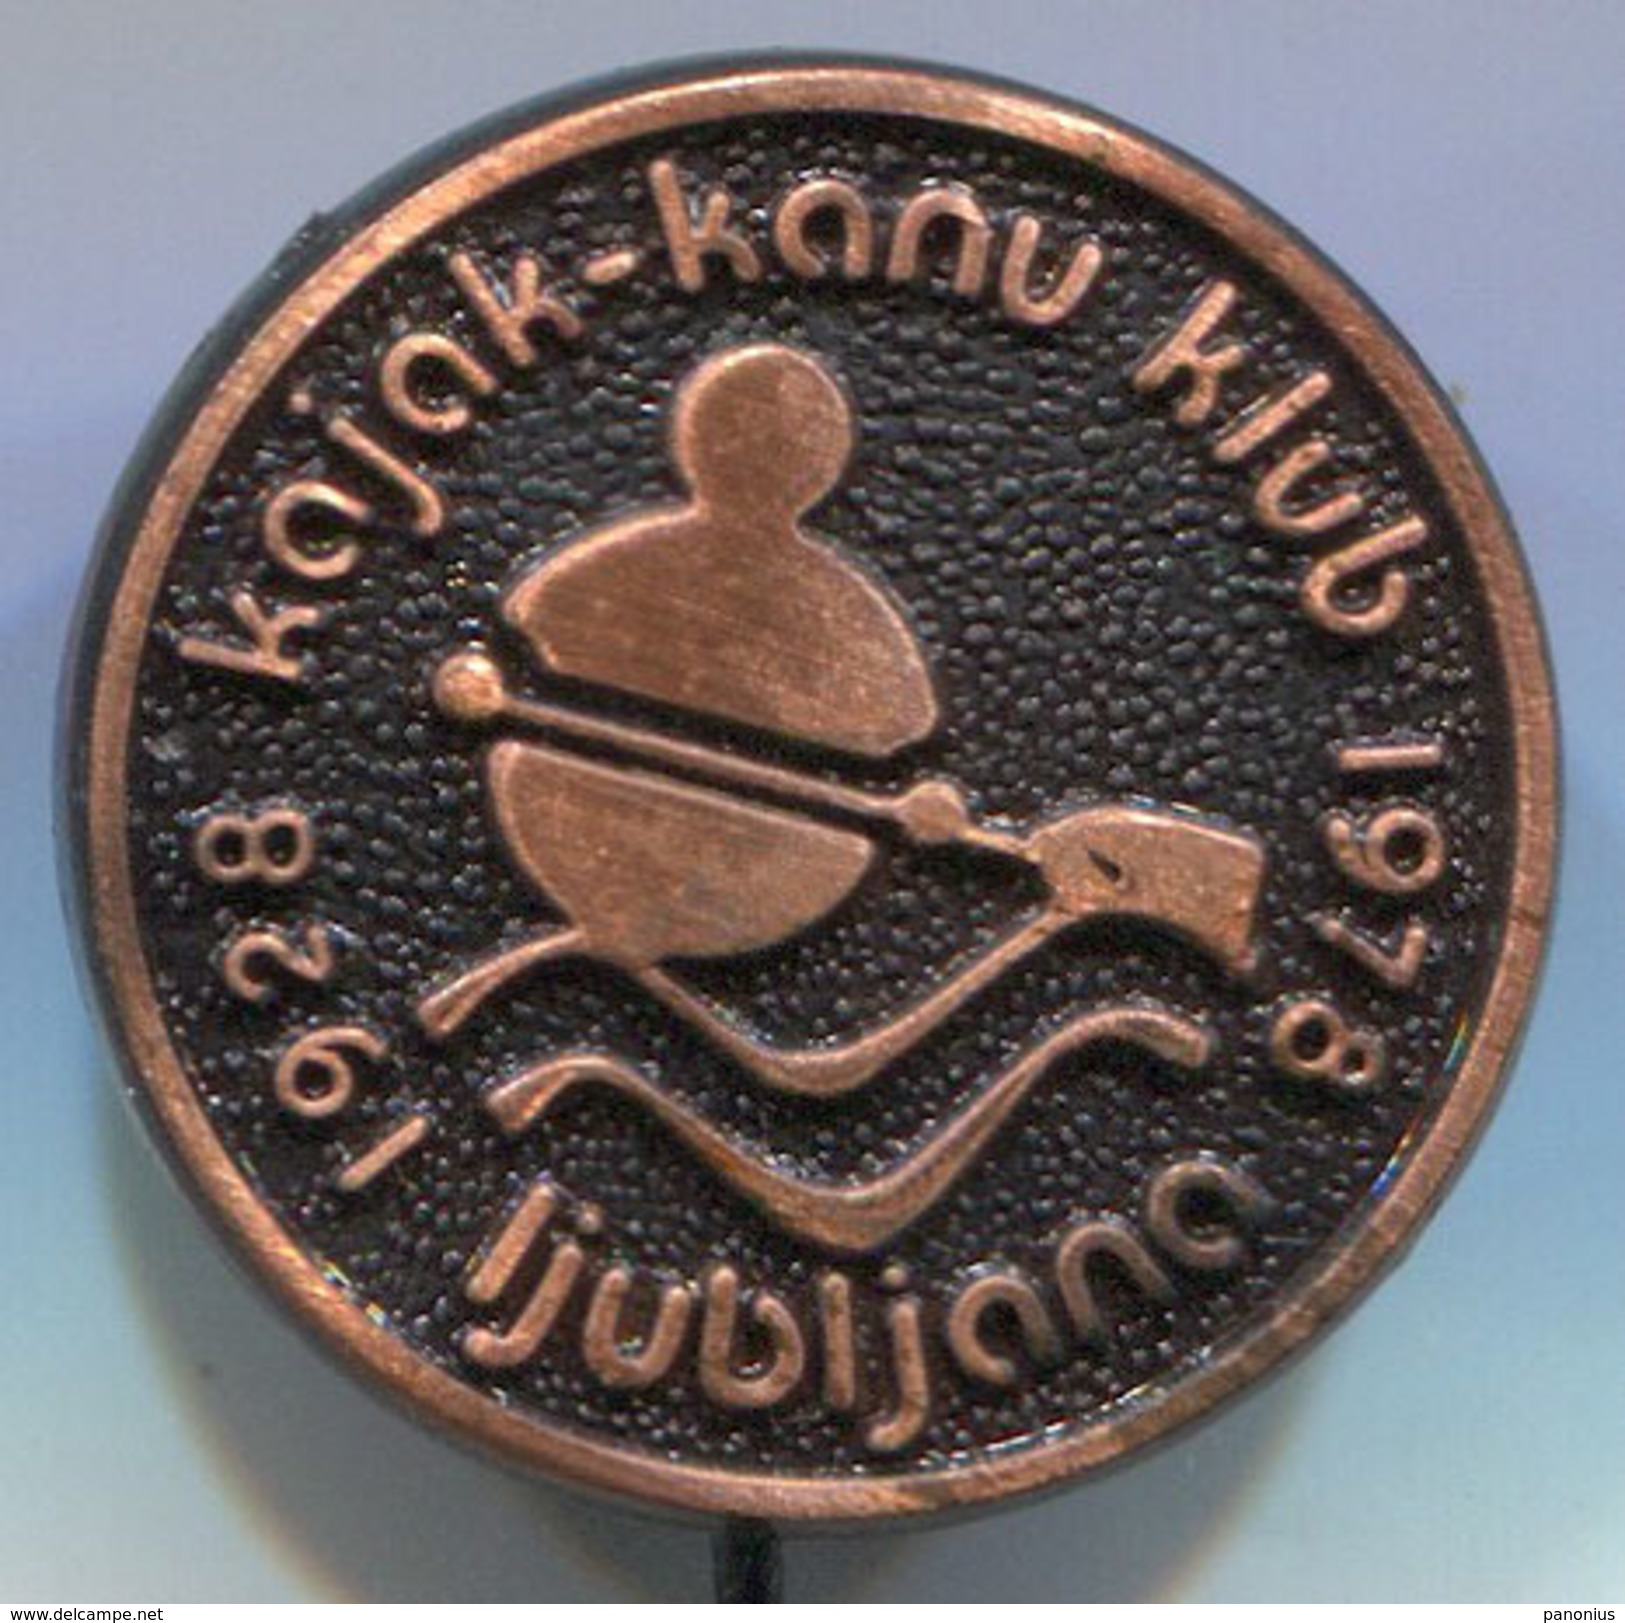 Rowing, Rudern, Canu, Kayak - Club LJUBLJANA, Slovenia, Vintage Pin, Badge, Abzeichen - Rowing